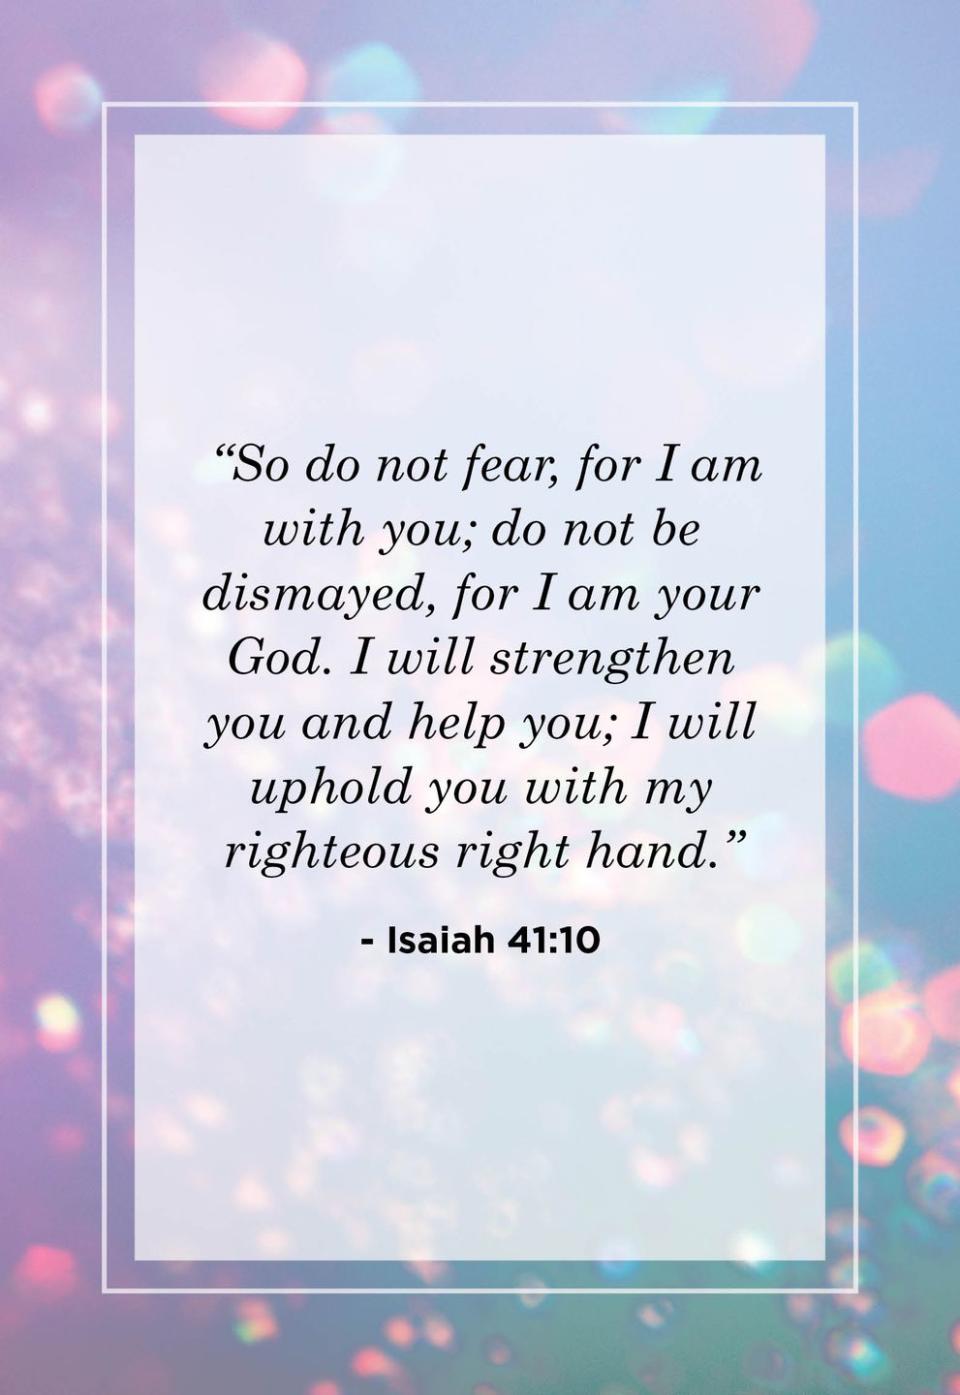 9) Isaiah 41:10